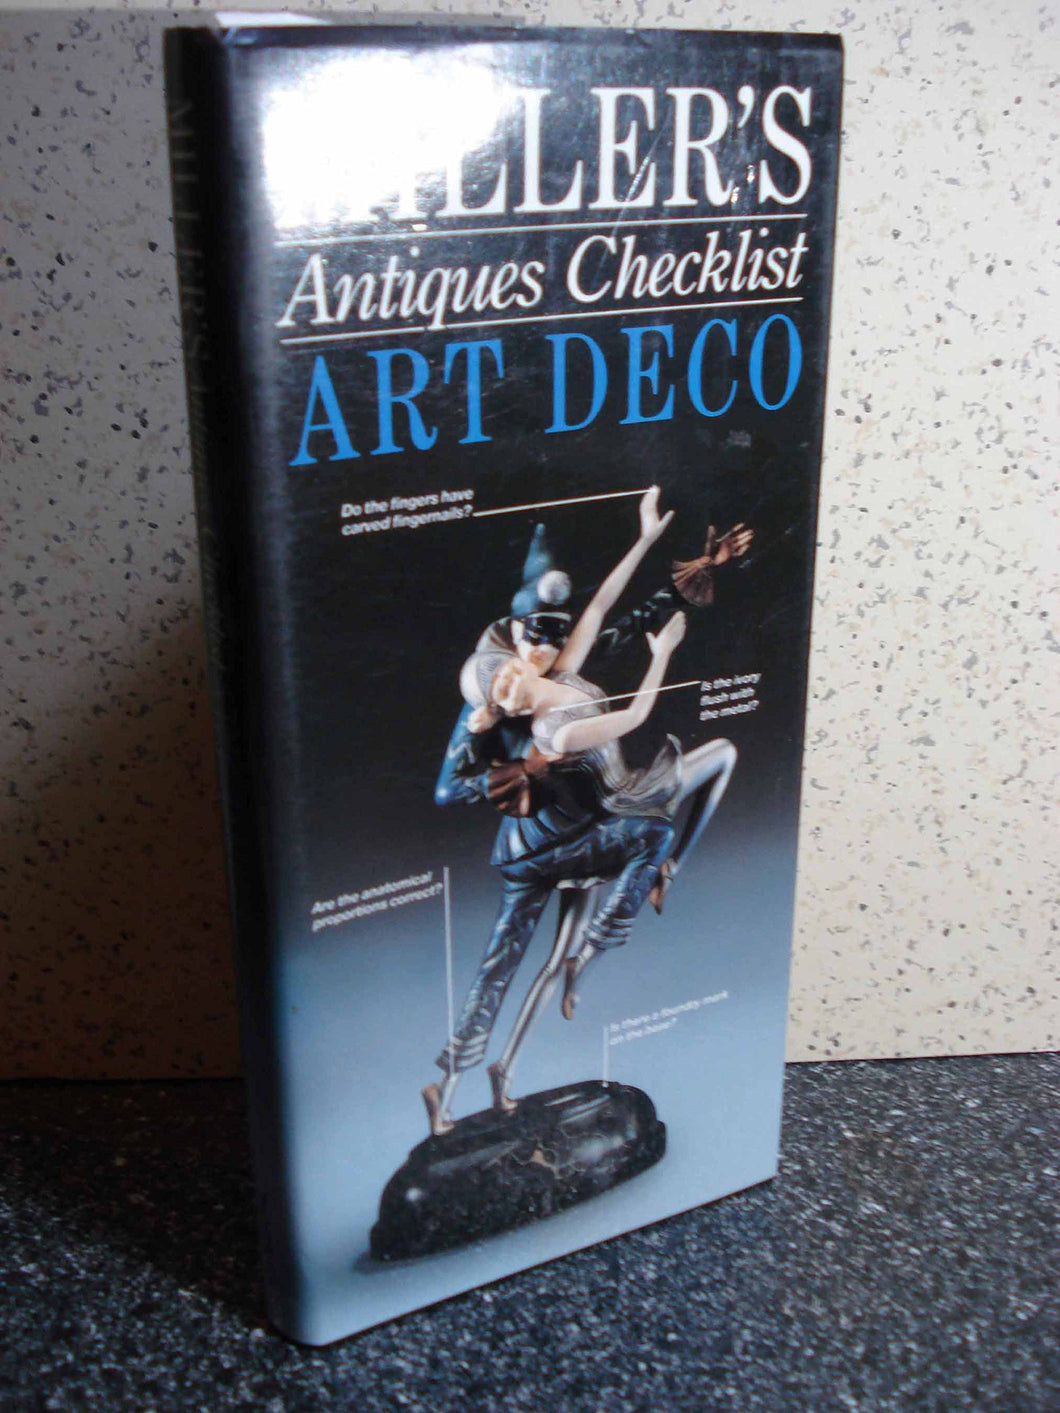 Miller's Antiques Checklist Art Deco. Judith Miller and Martin Miller